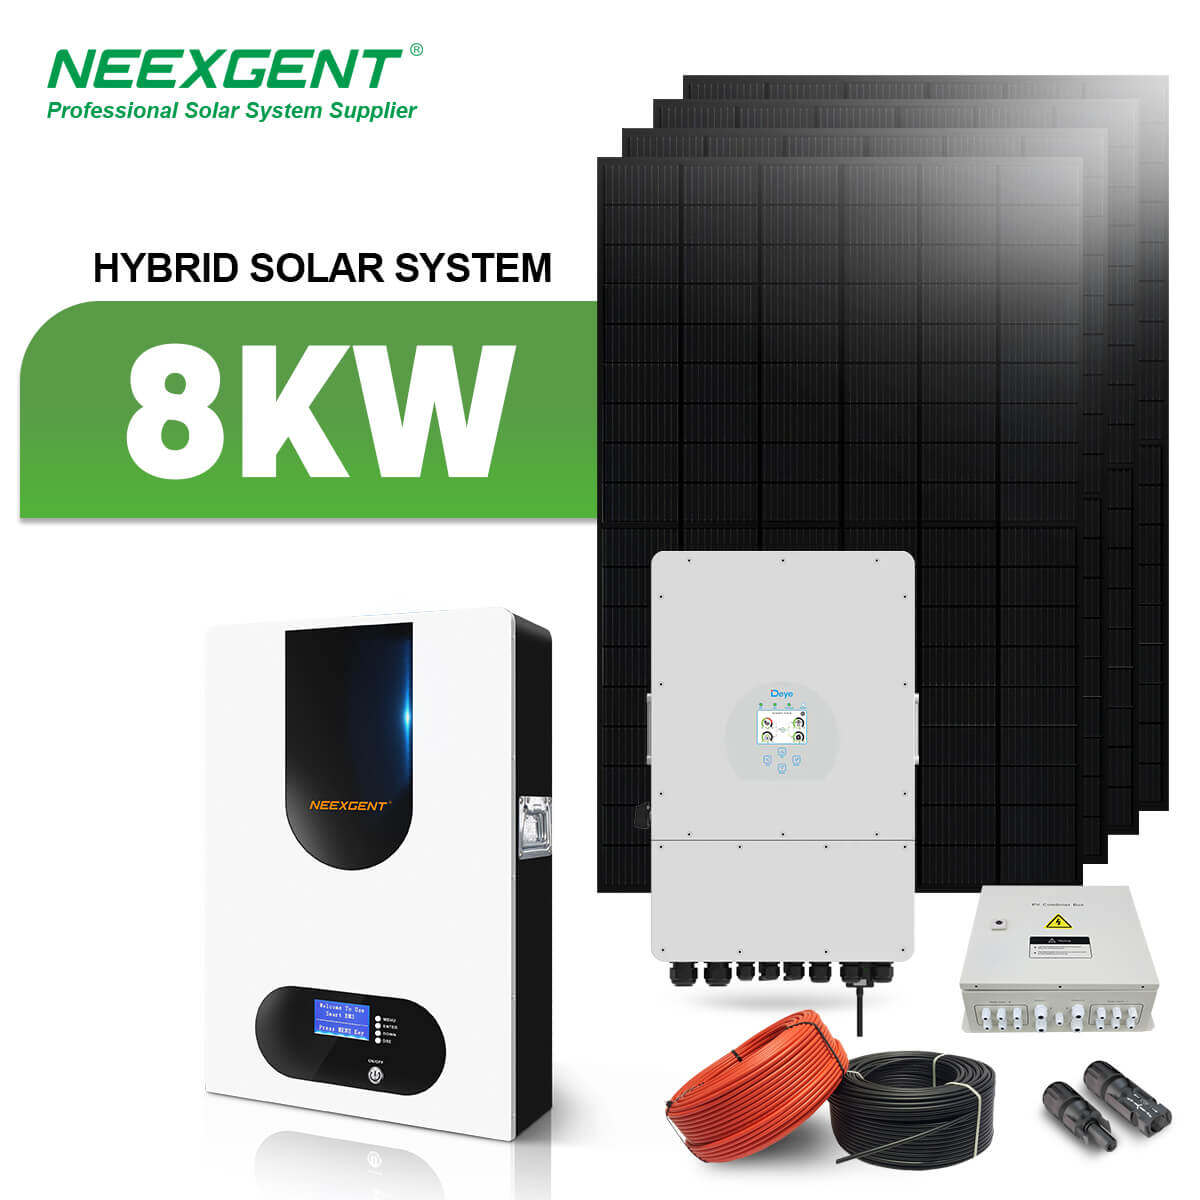 Neexgent High Efficiency Solar Kit 8kw on off Grid Hybrid Solar Energy System for Home